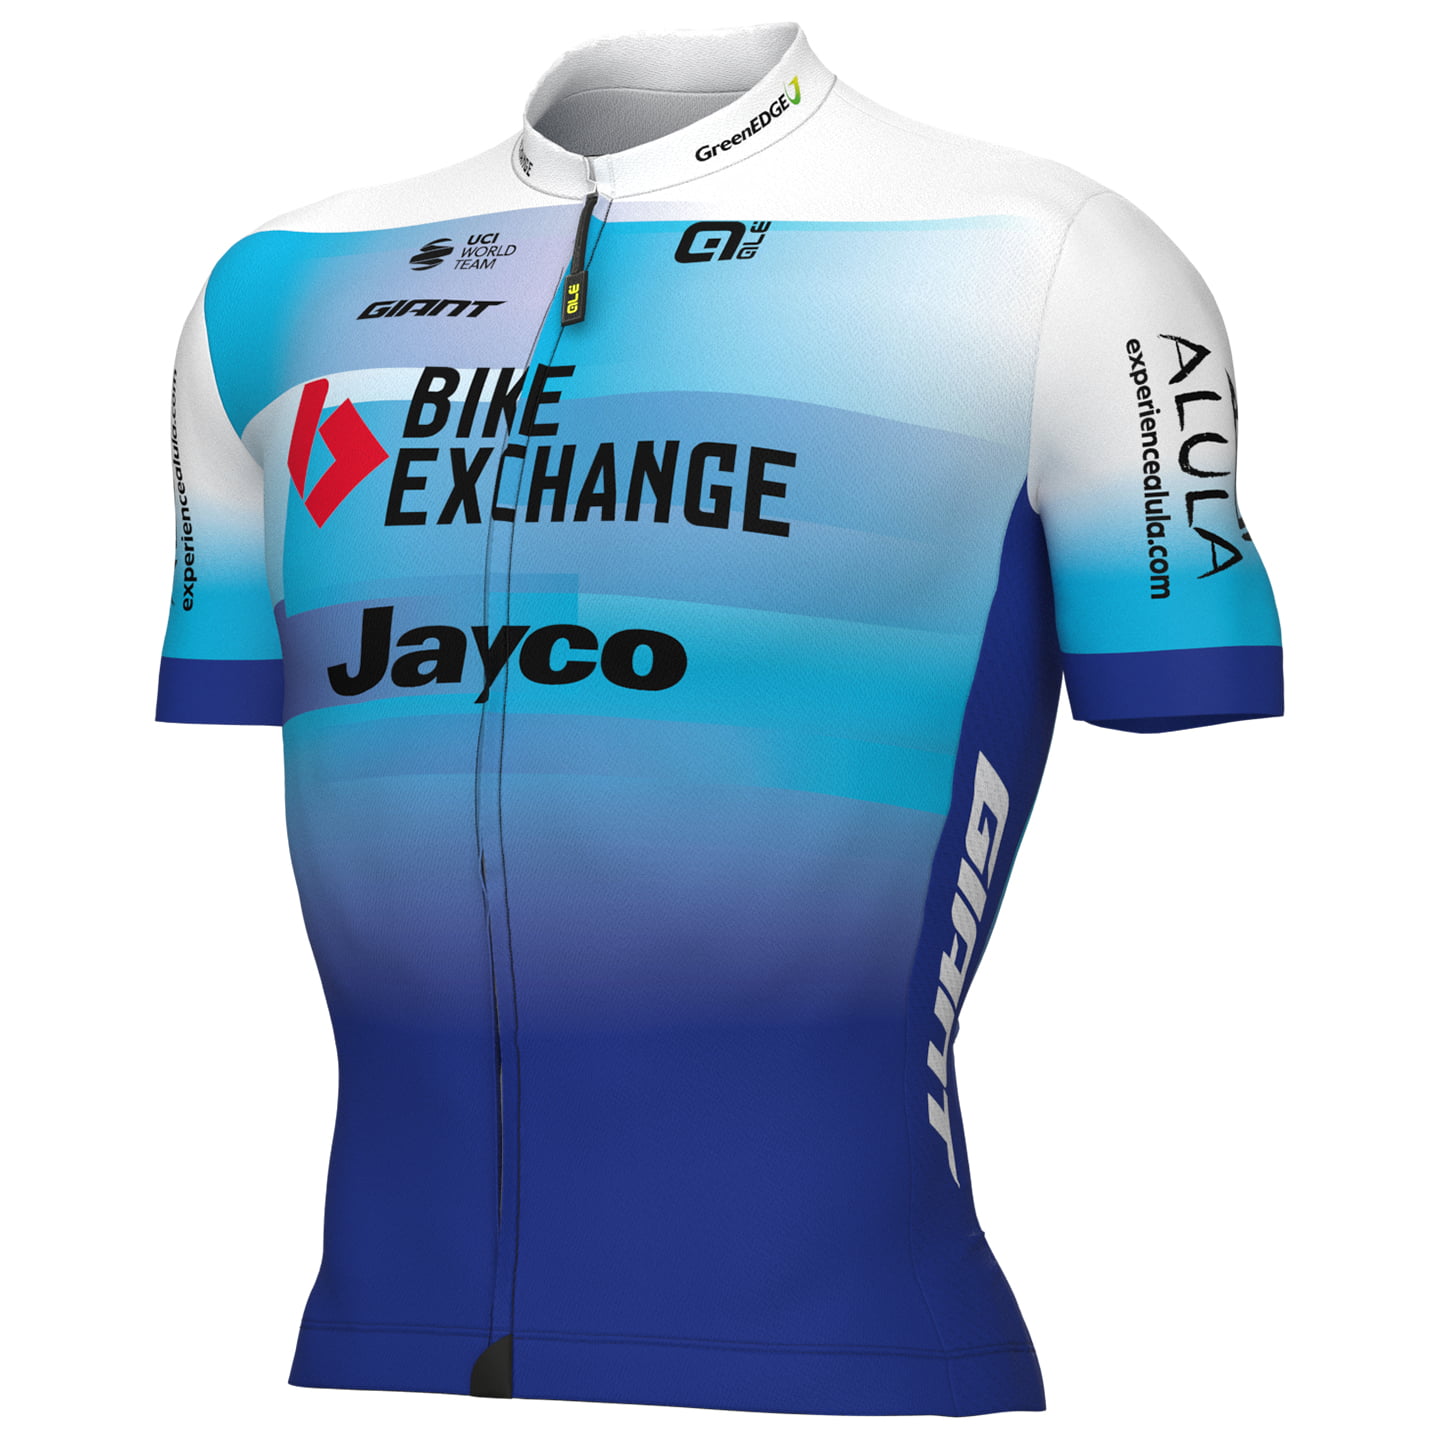 TEAM BIKEEXCHANGE-JAYCO 2022 Short Sleeve Jersey, for men, size 2XL, Cycle shirt, Bike gear